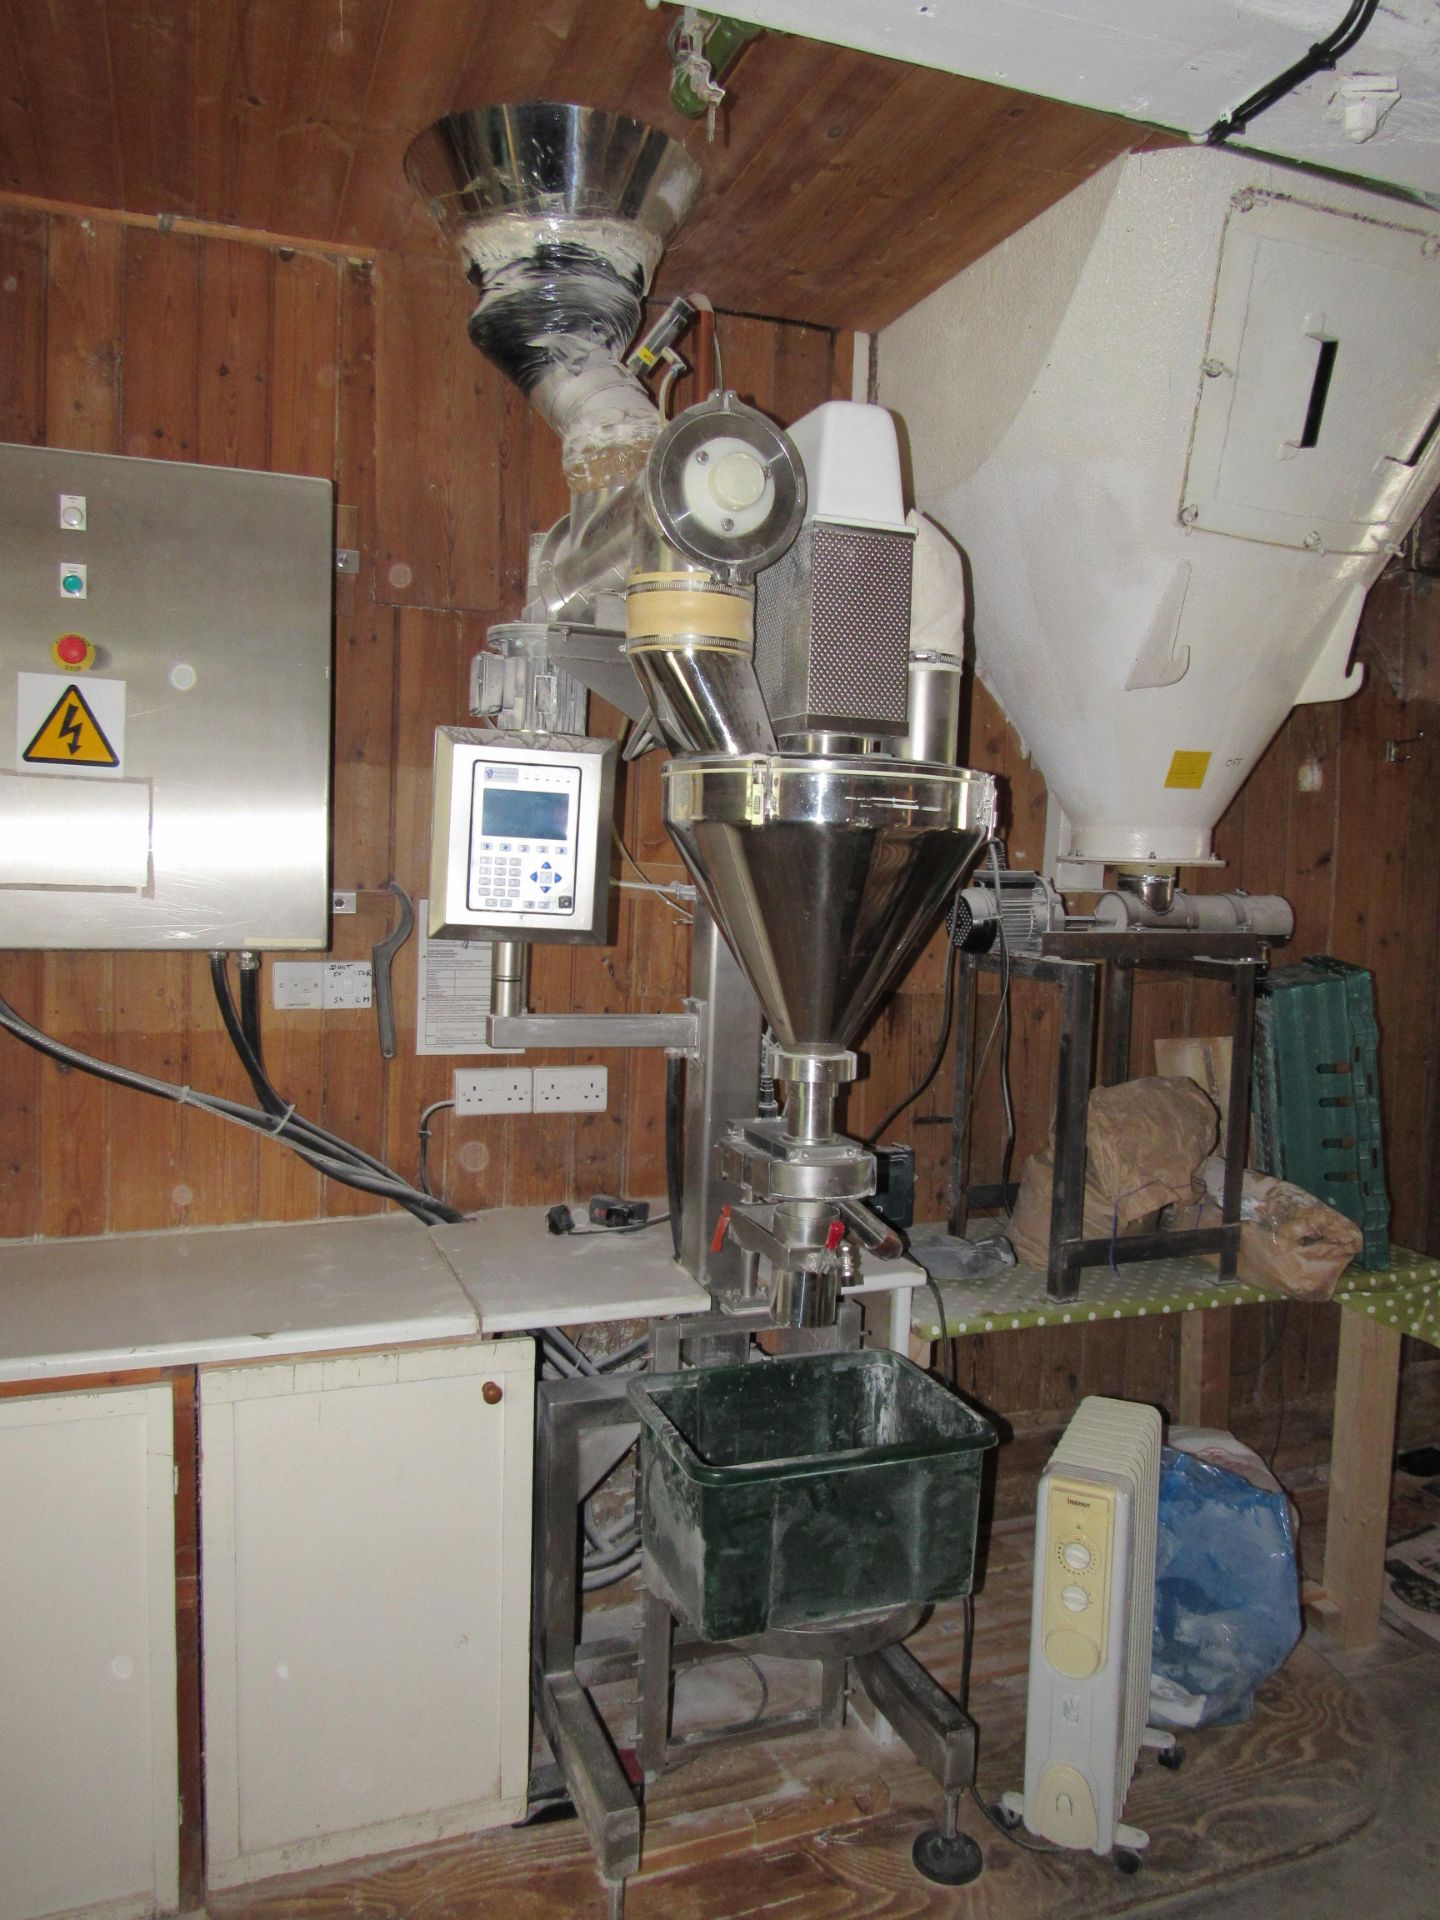 Ward Becker / Guttridge mechanical batch weigher / flour bagging machine with control system - Image 13 of 17